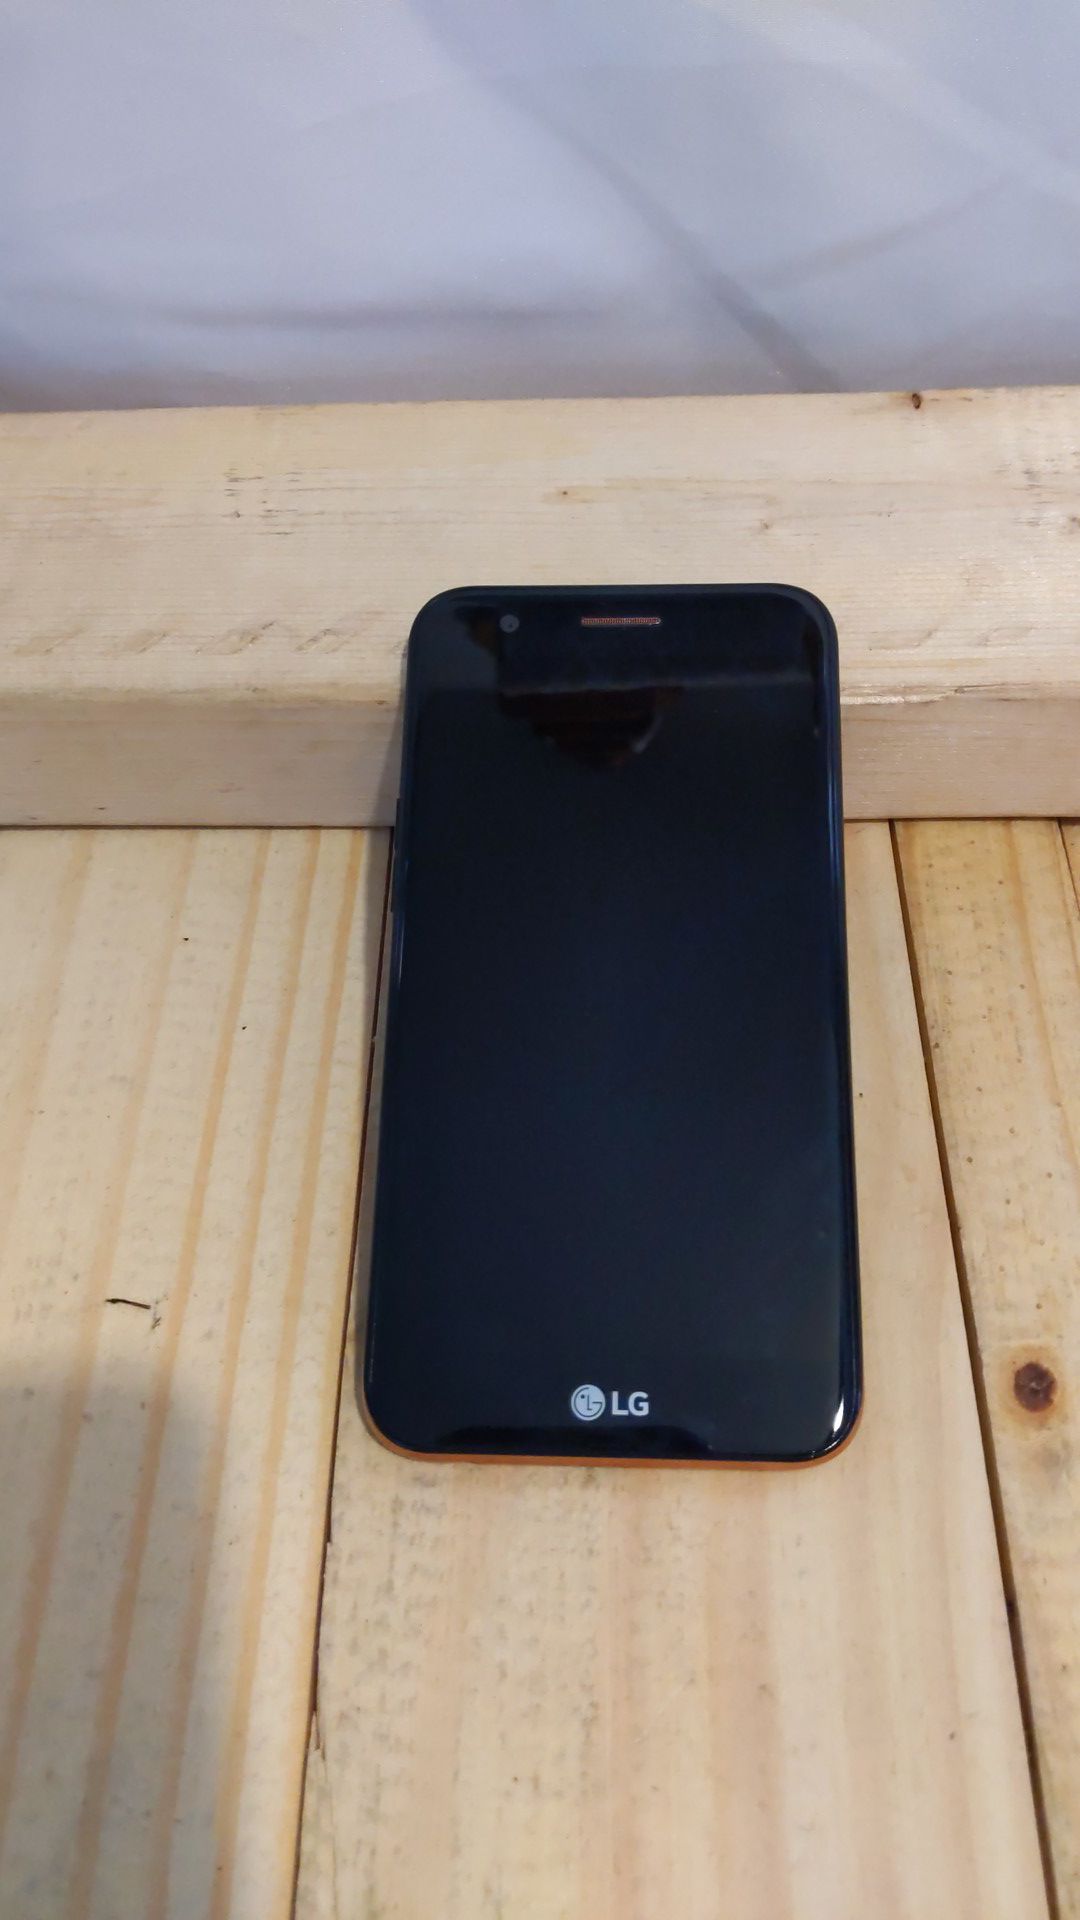 LG K20 Plus 32 GB Metro PCS Smartphone Black Gold Trim